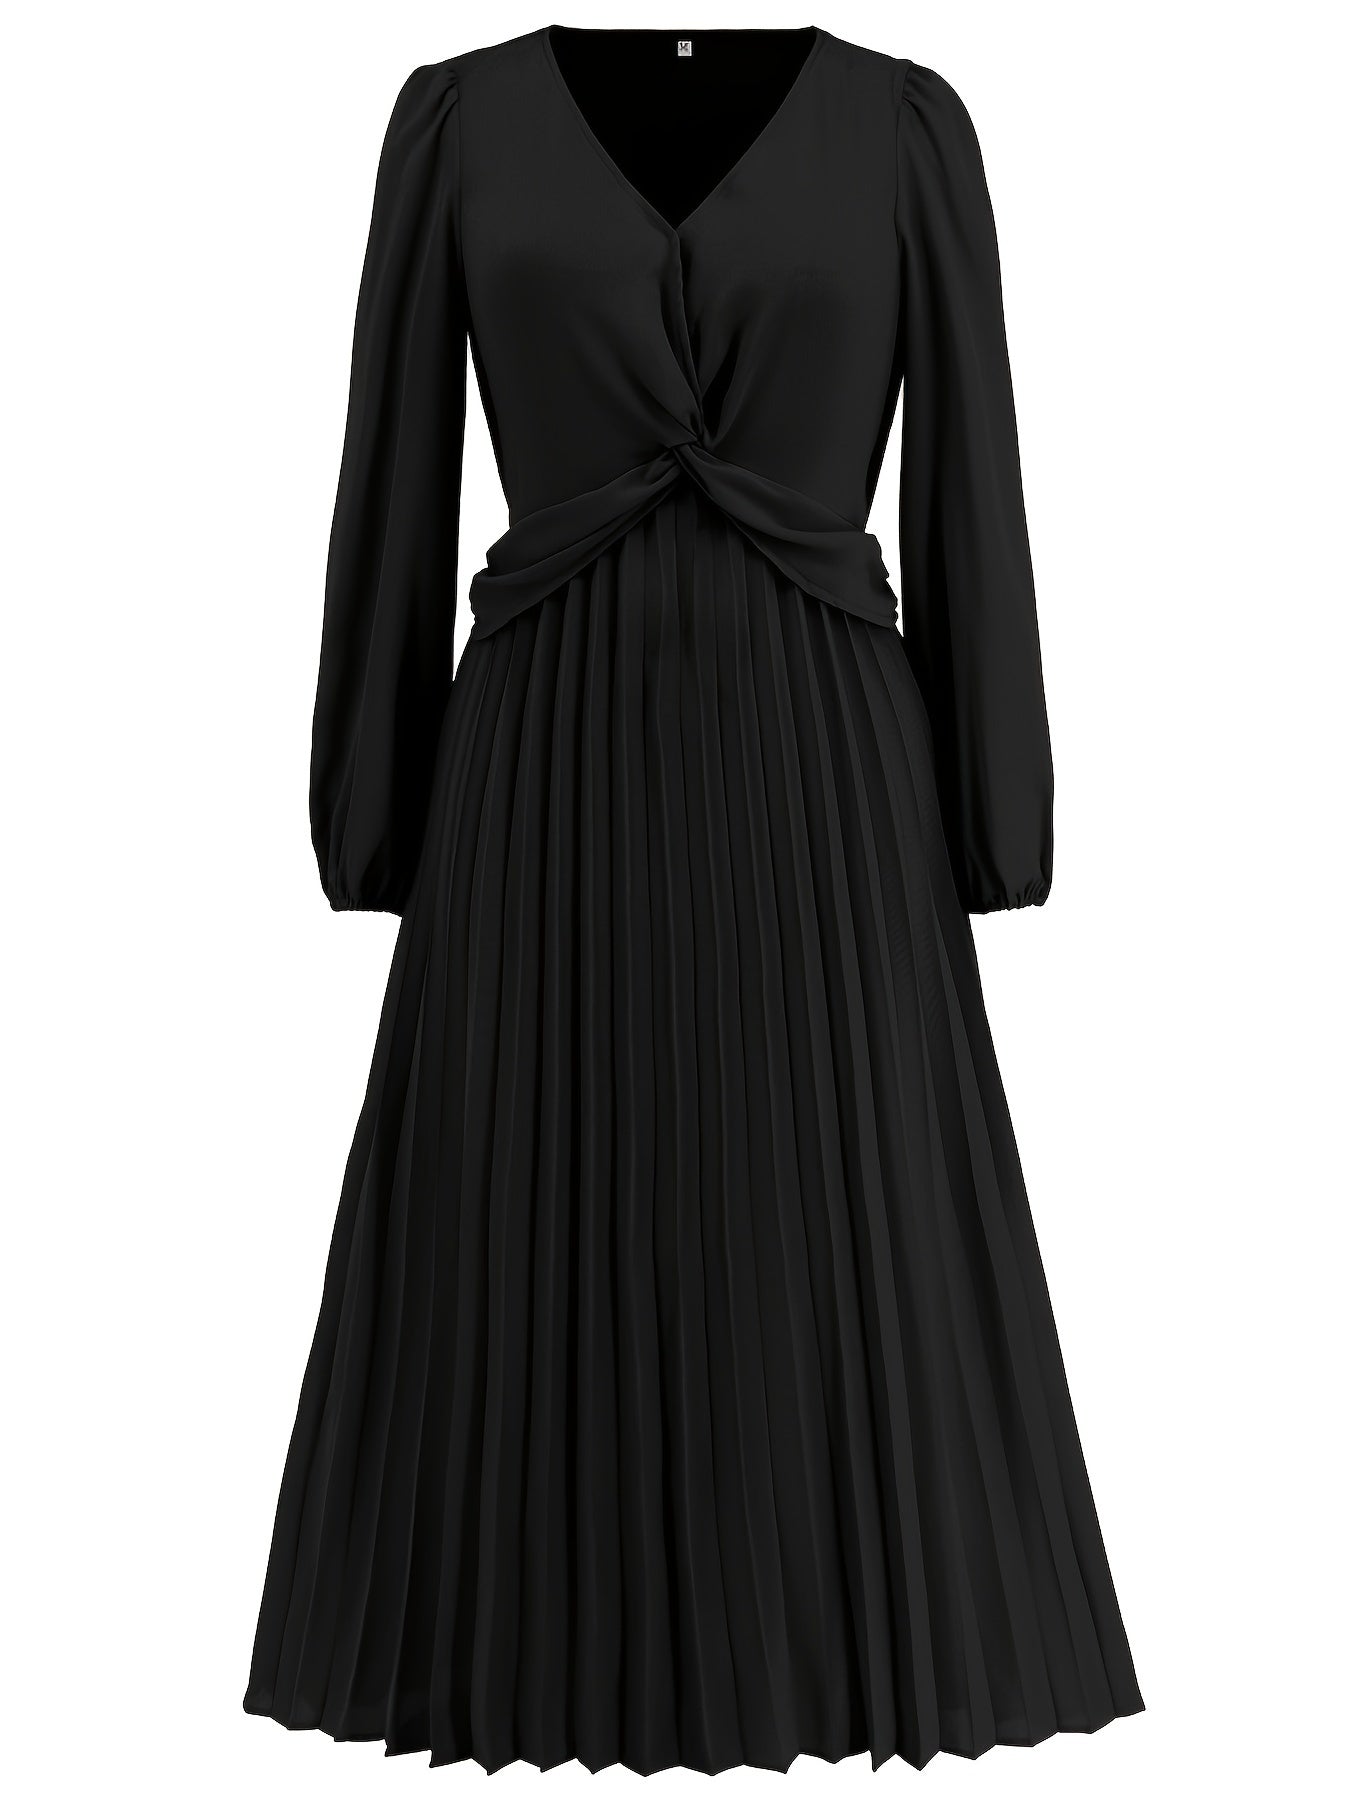 Antmvs Twist Front Pleated Dress, Elegant V Neck Long Sleeve Dress, Women's Clothing